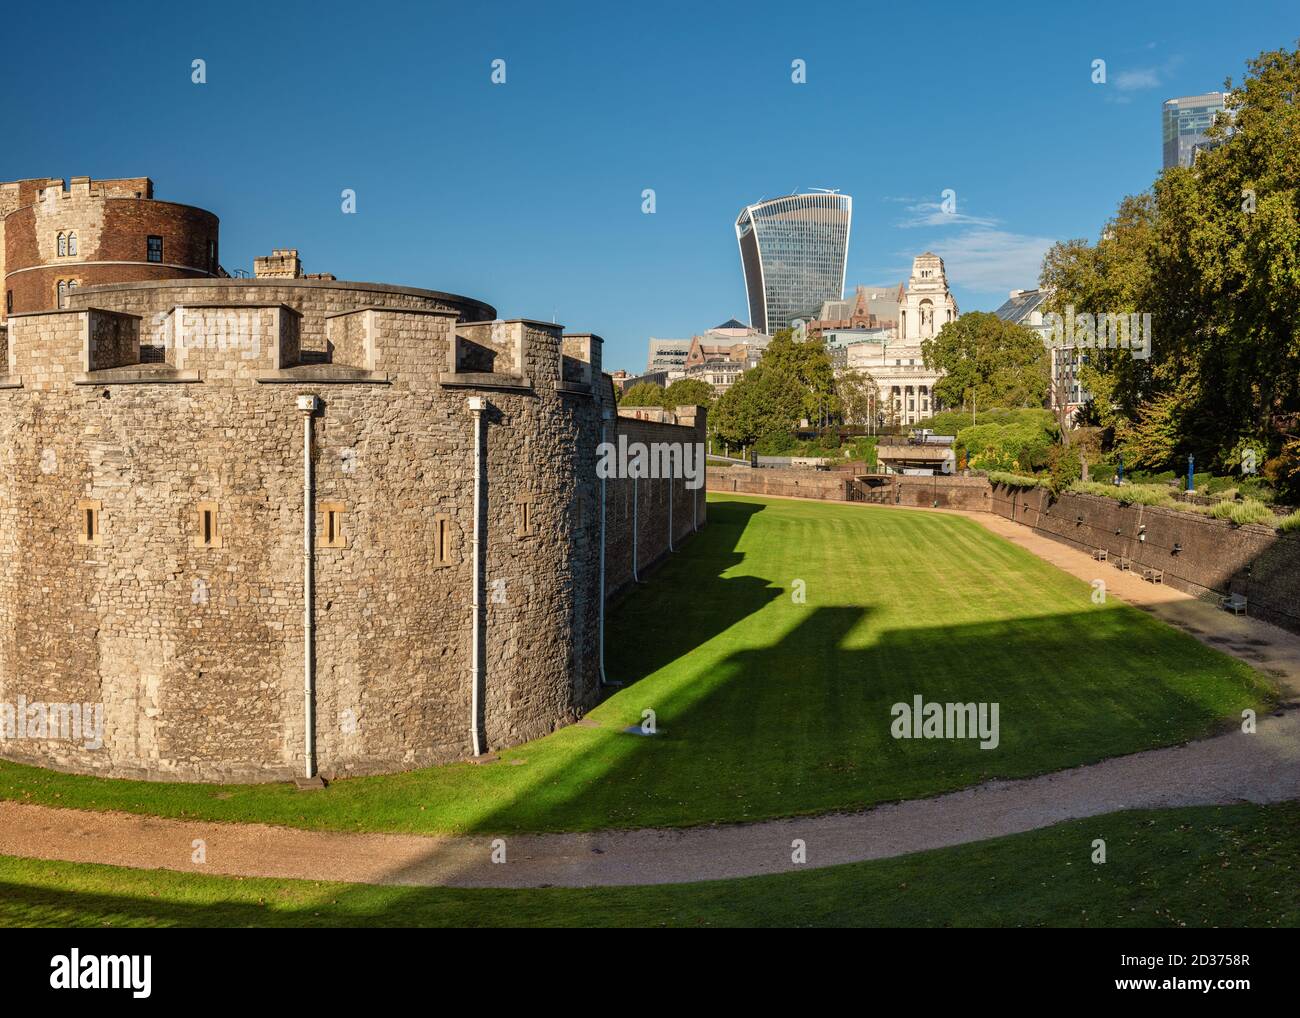 Torre delle mura di Londra e una vista su 20 Fenchurch Street - Walkie Talkie, Londra Inghilterra Foto Stock